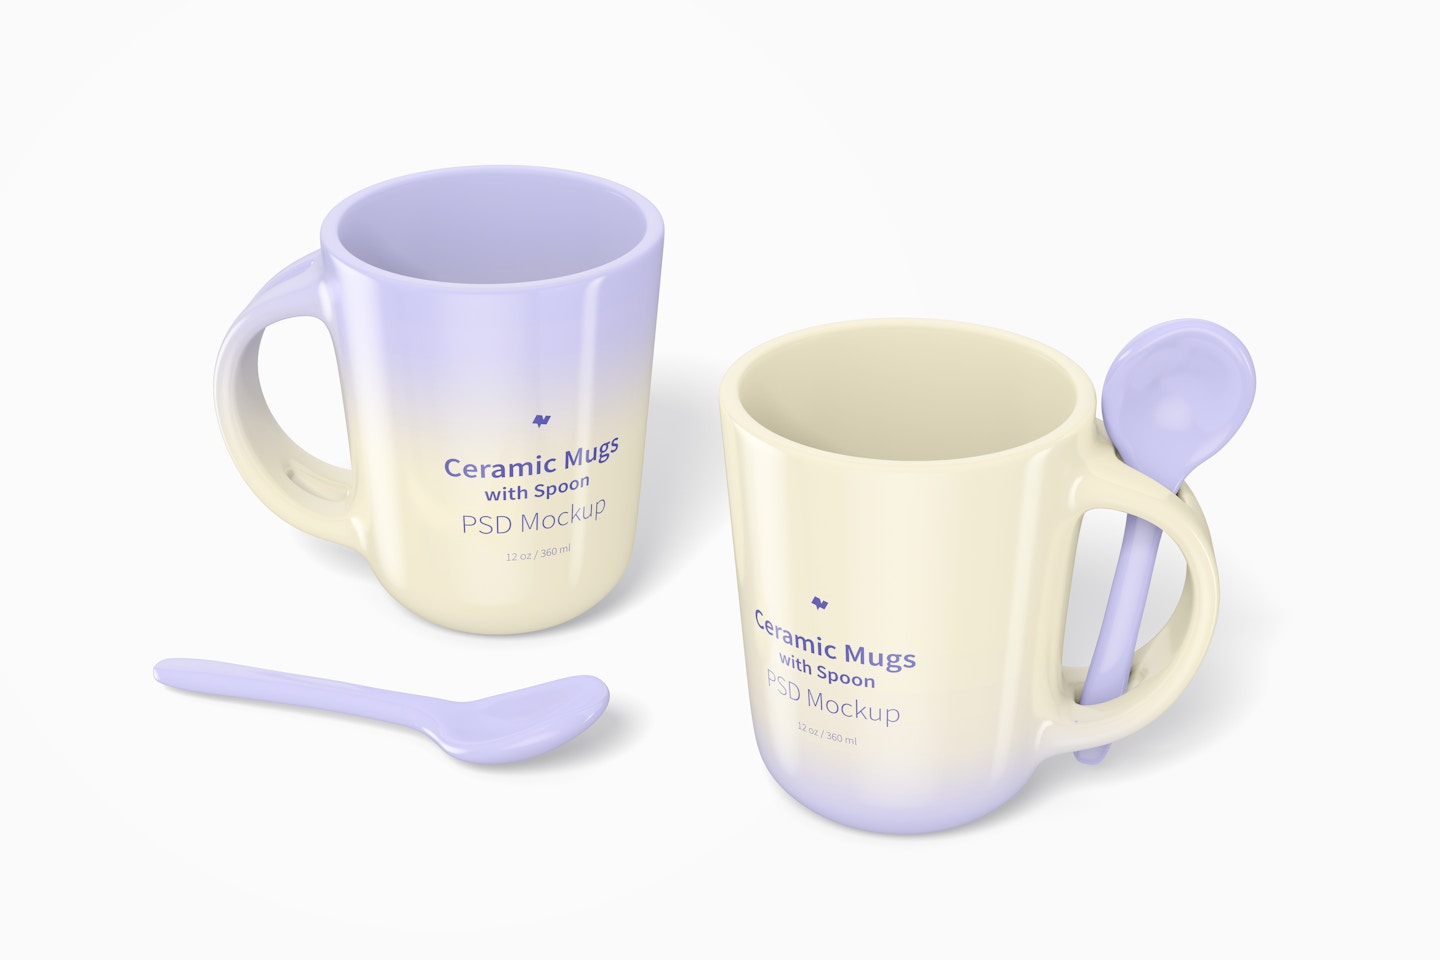 12 oz Ceramic Mugs with Spoon Mockup